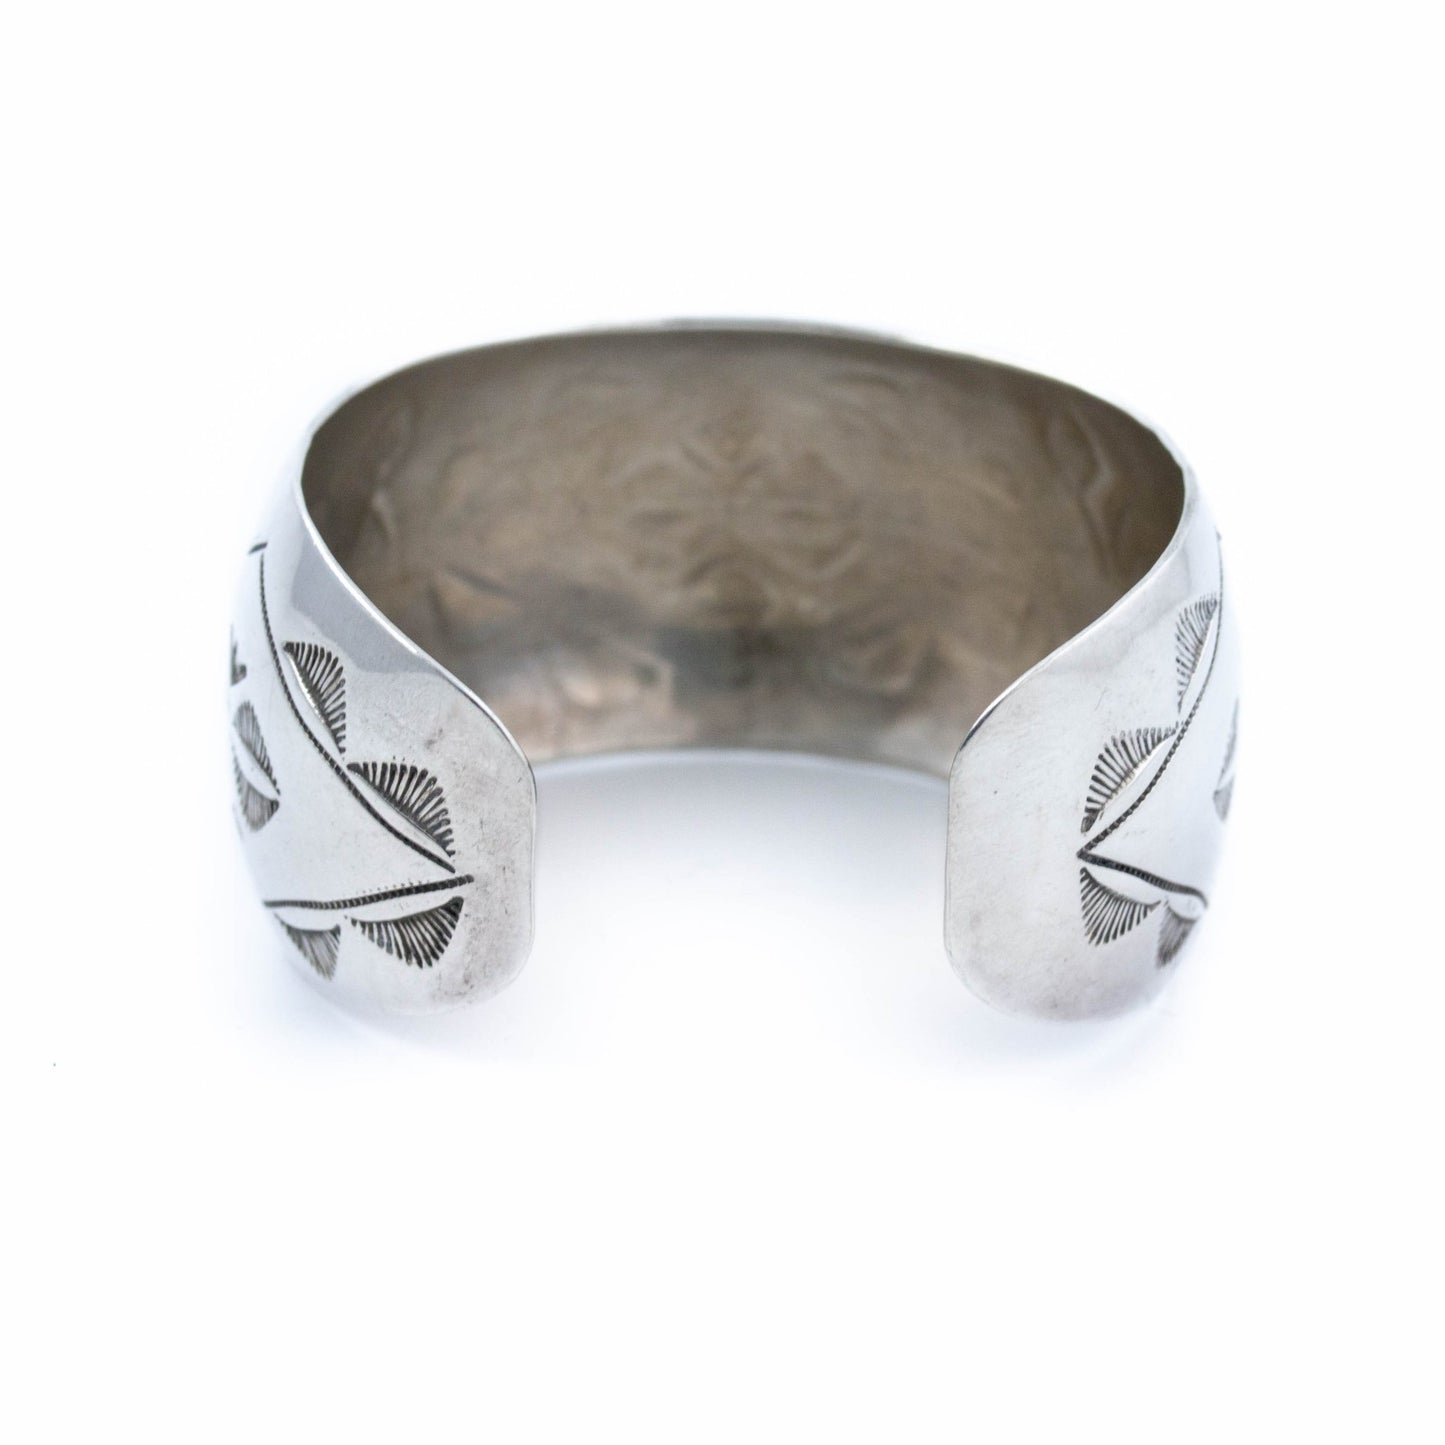 Traditionally Stamped Navajo Cuff - Kingdom Jewelry